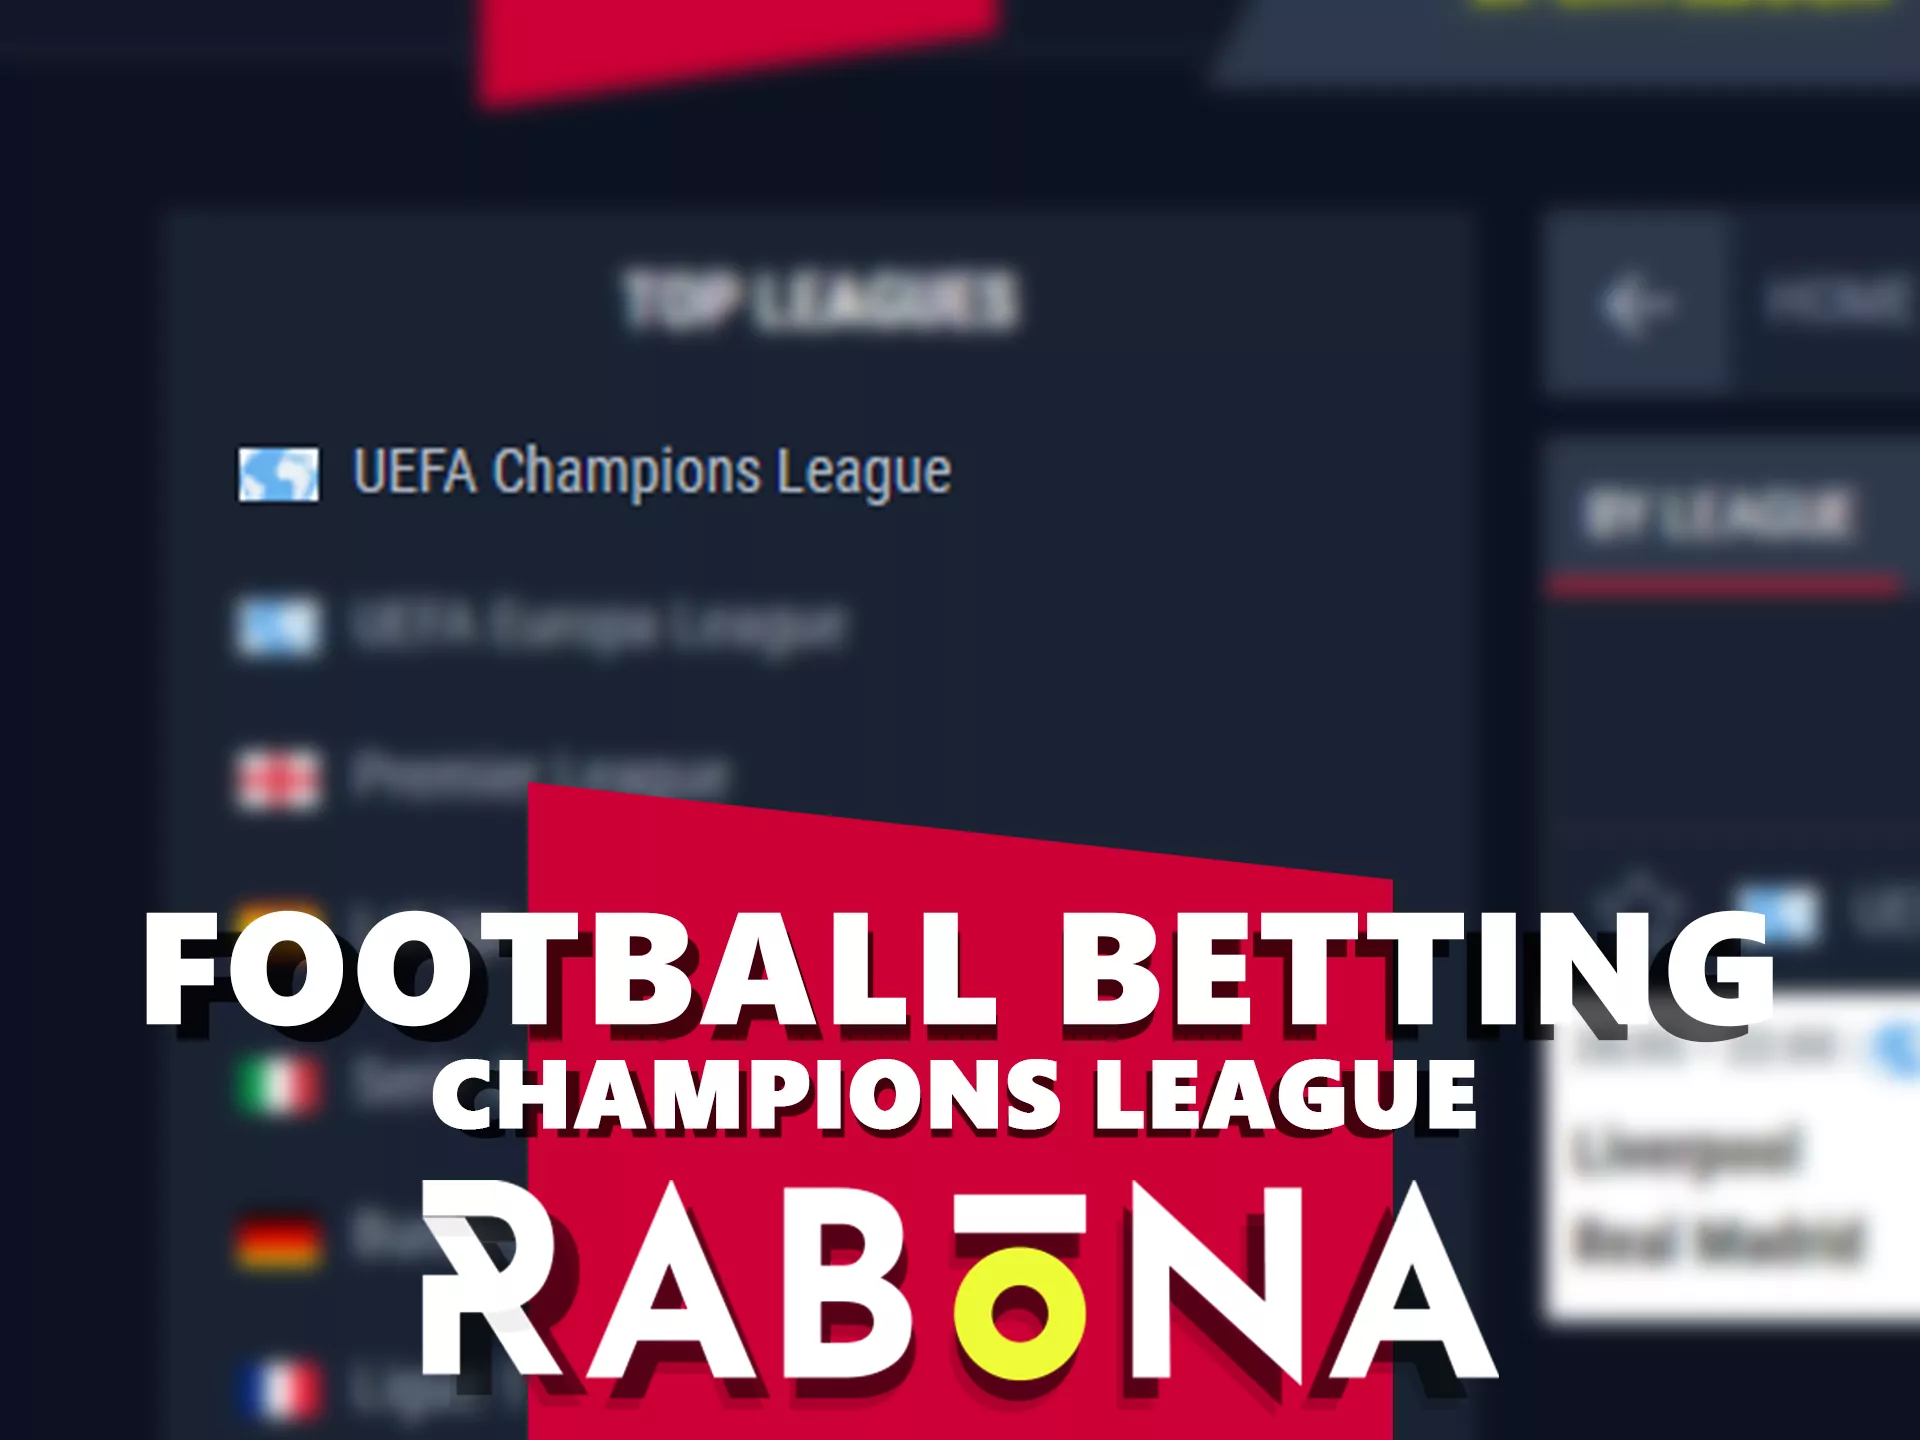 Football champions league betting on Rabona.